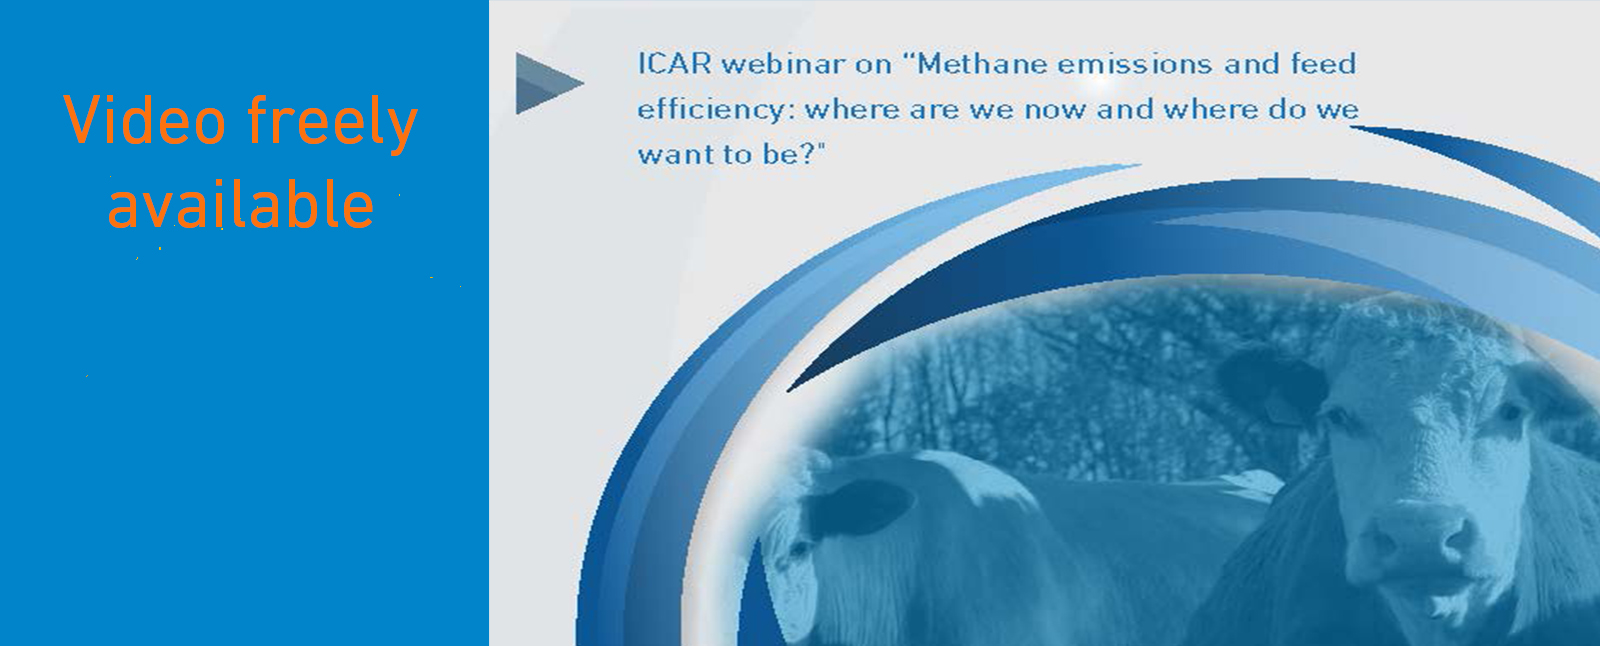 Webinar on “Methane emissions and feed efficiency”